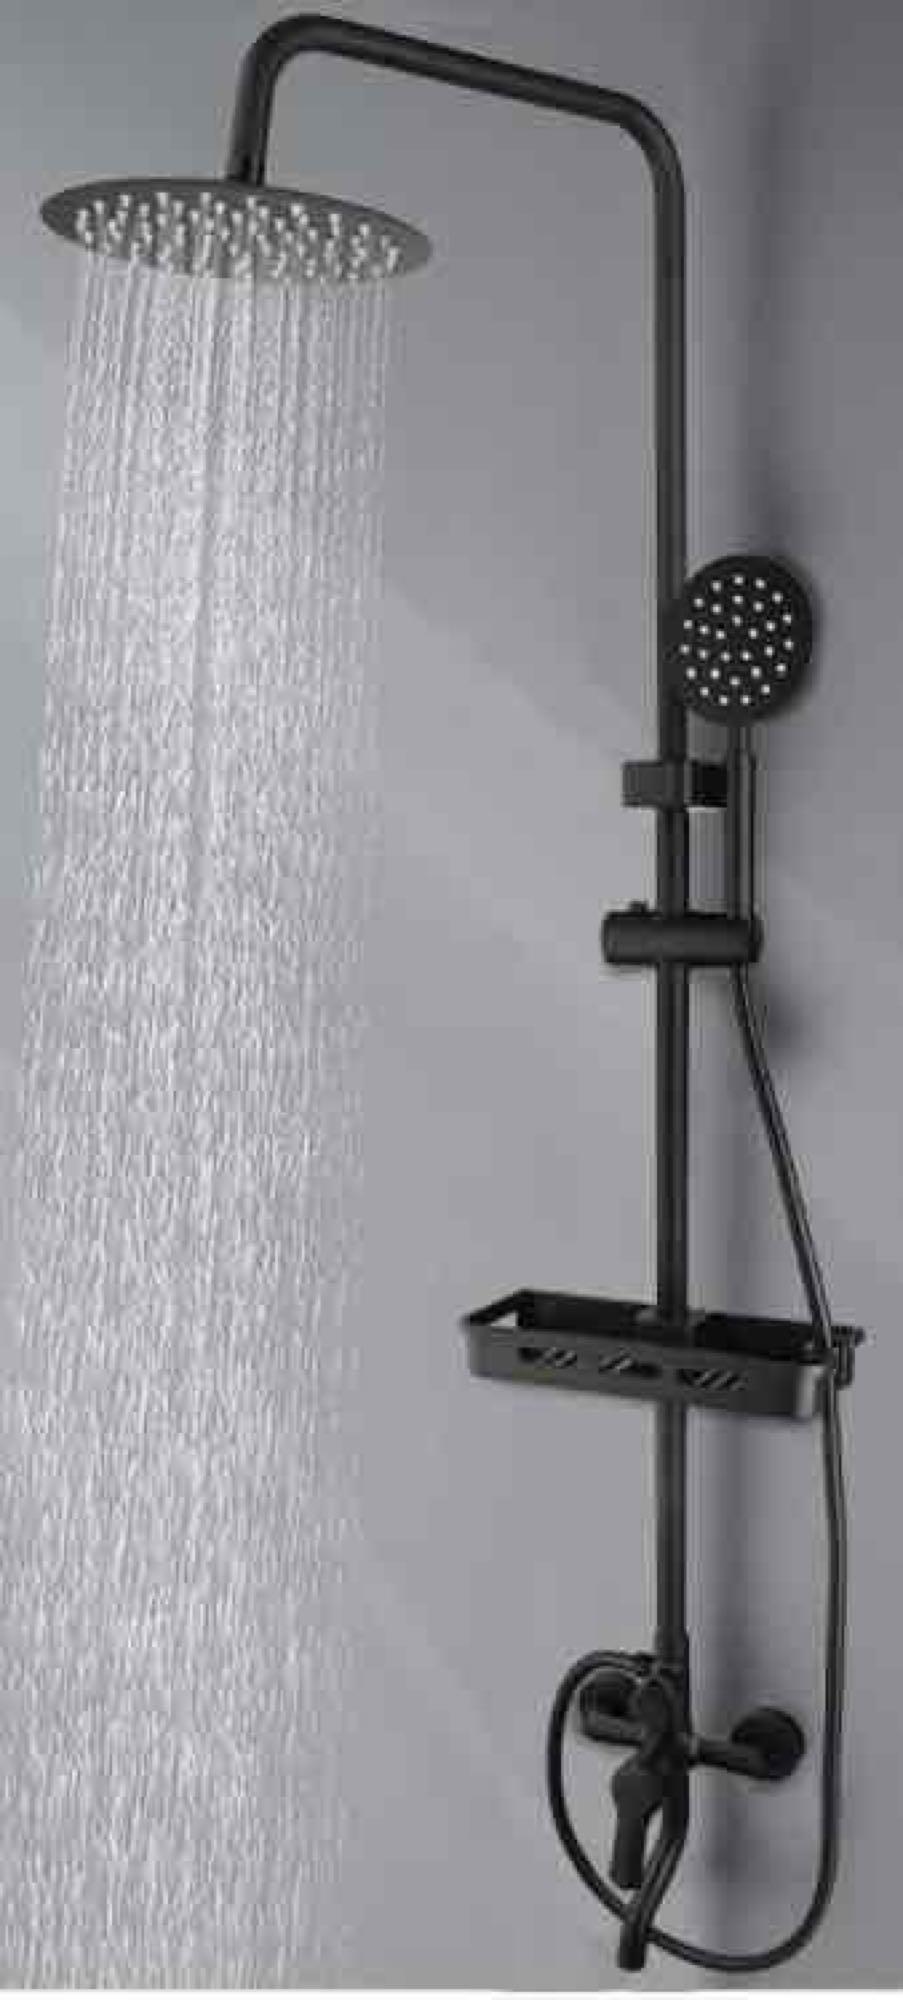 KECTIAKL Matte Black Exposed Shower System 8 Inch Rainfall